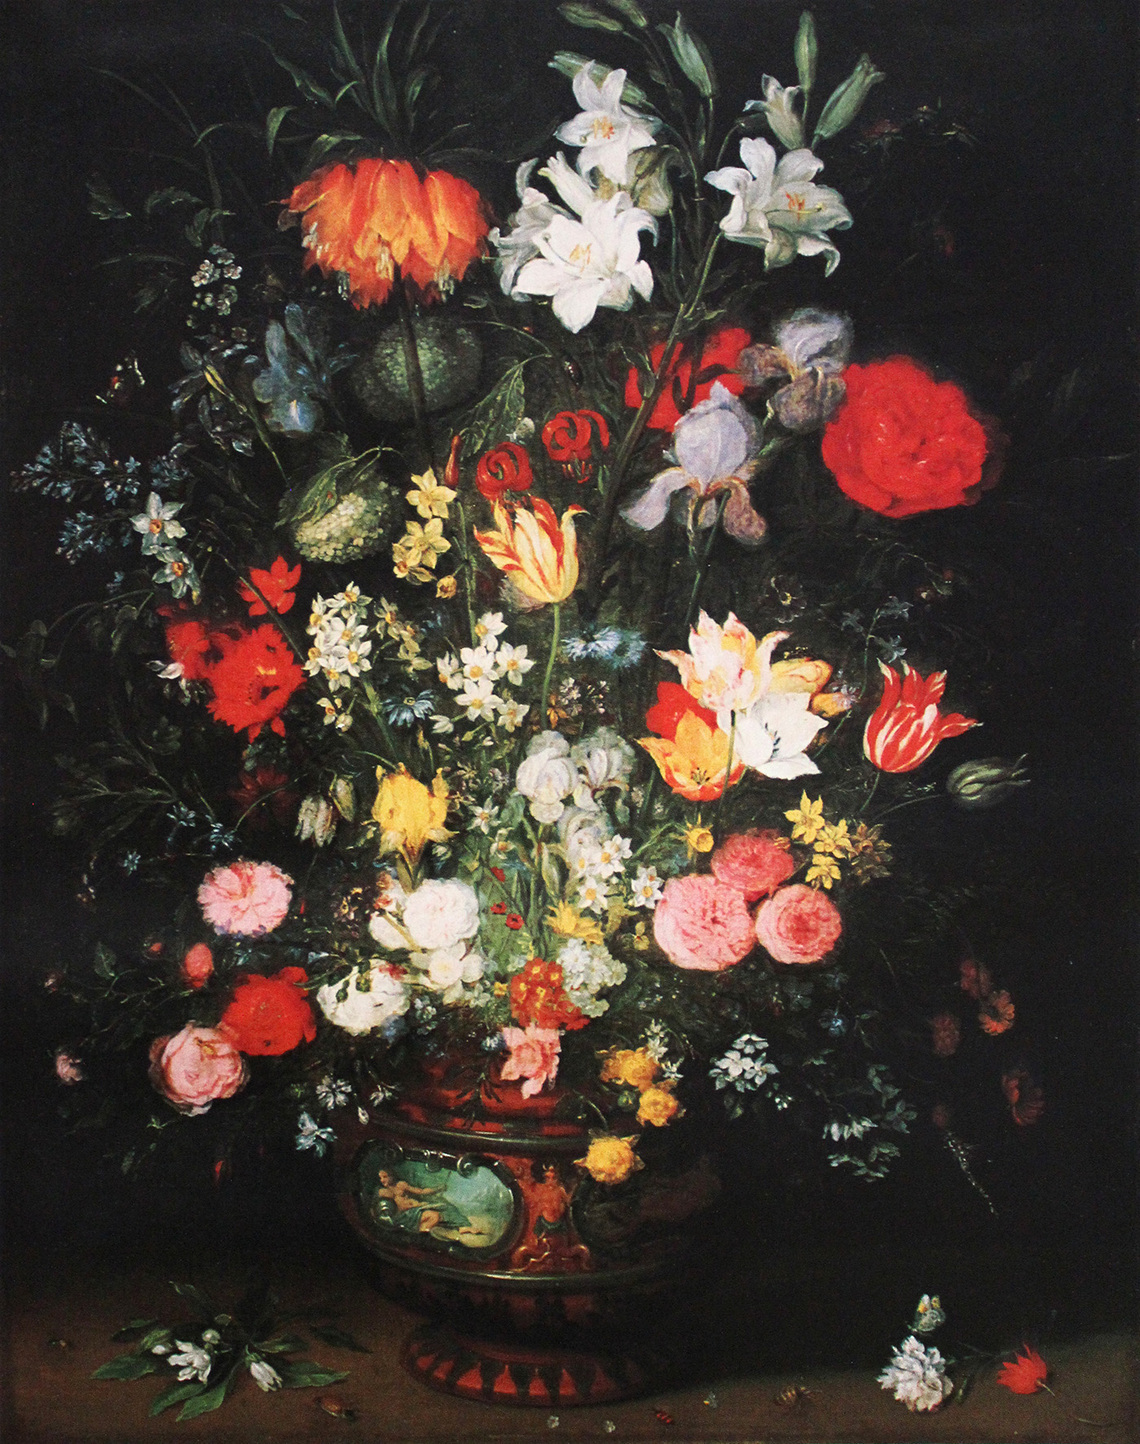 Flowers in a Decorated Ceramic Vase (Detroit)